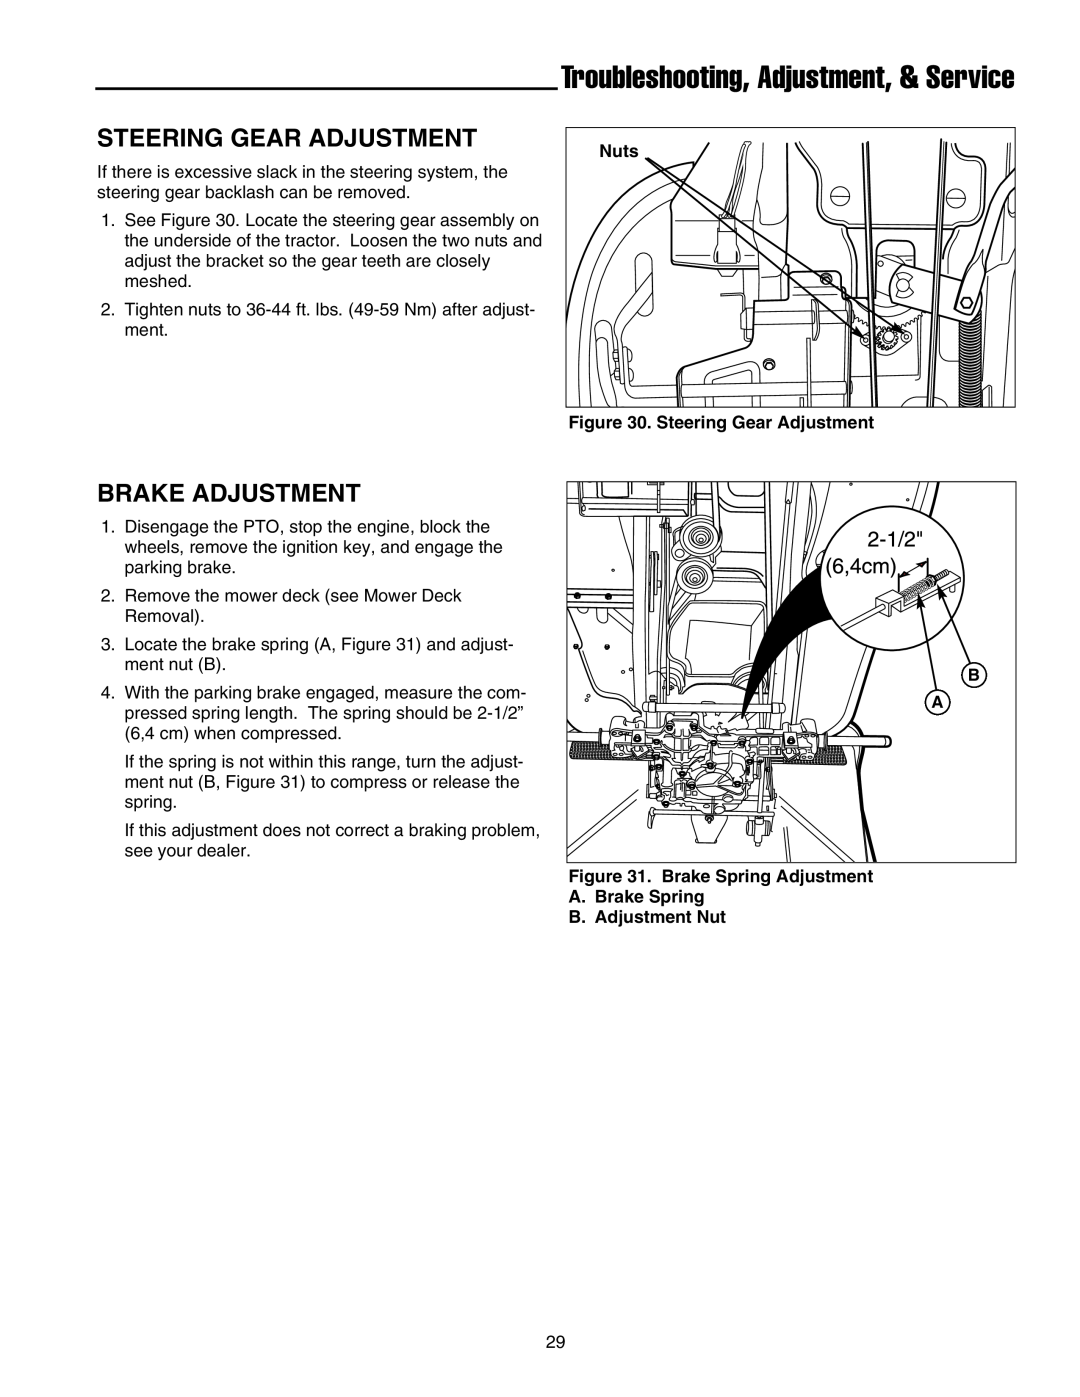 Snapper XL Series manual Steering Gear Adjustment, Brake Adjustment, Troubleshooting, Adjustment, & Service 